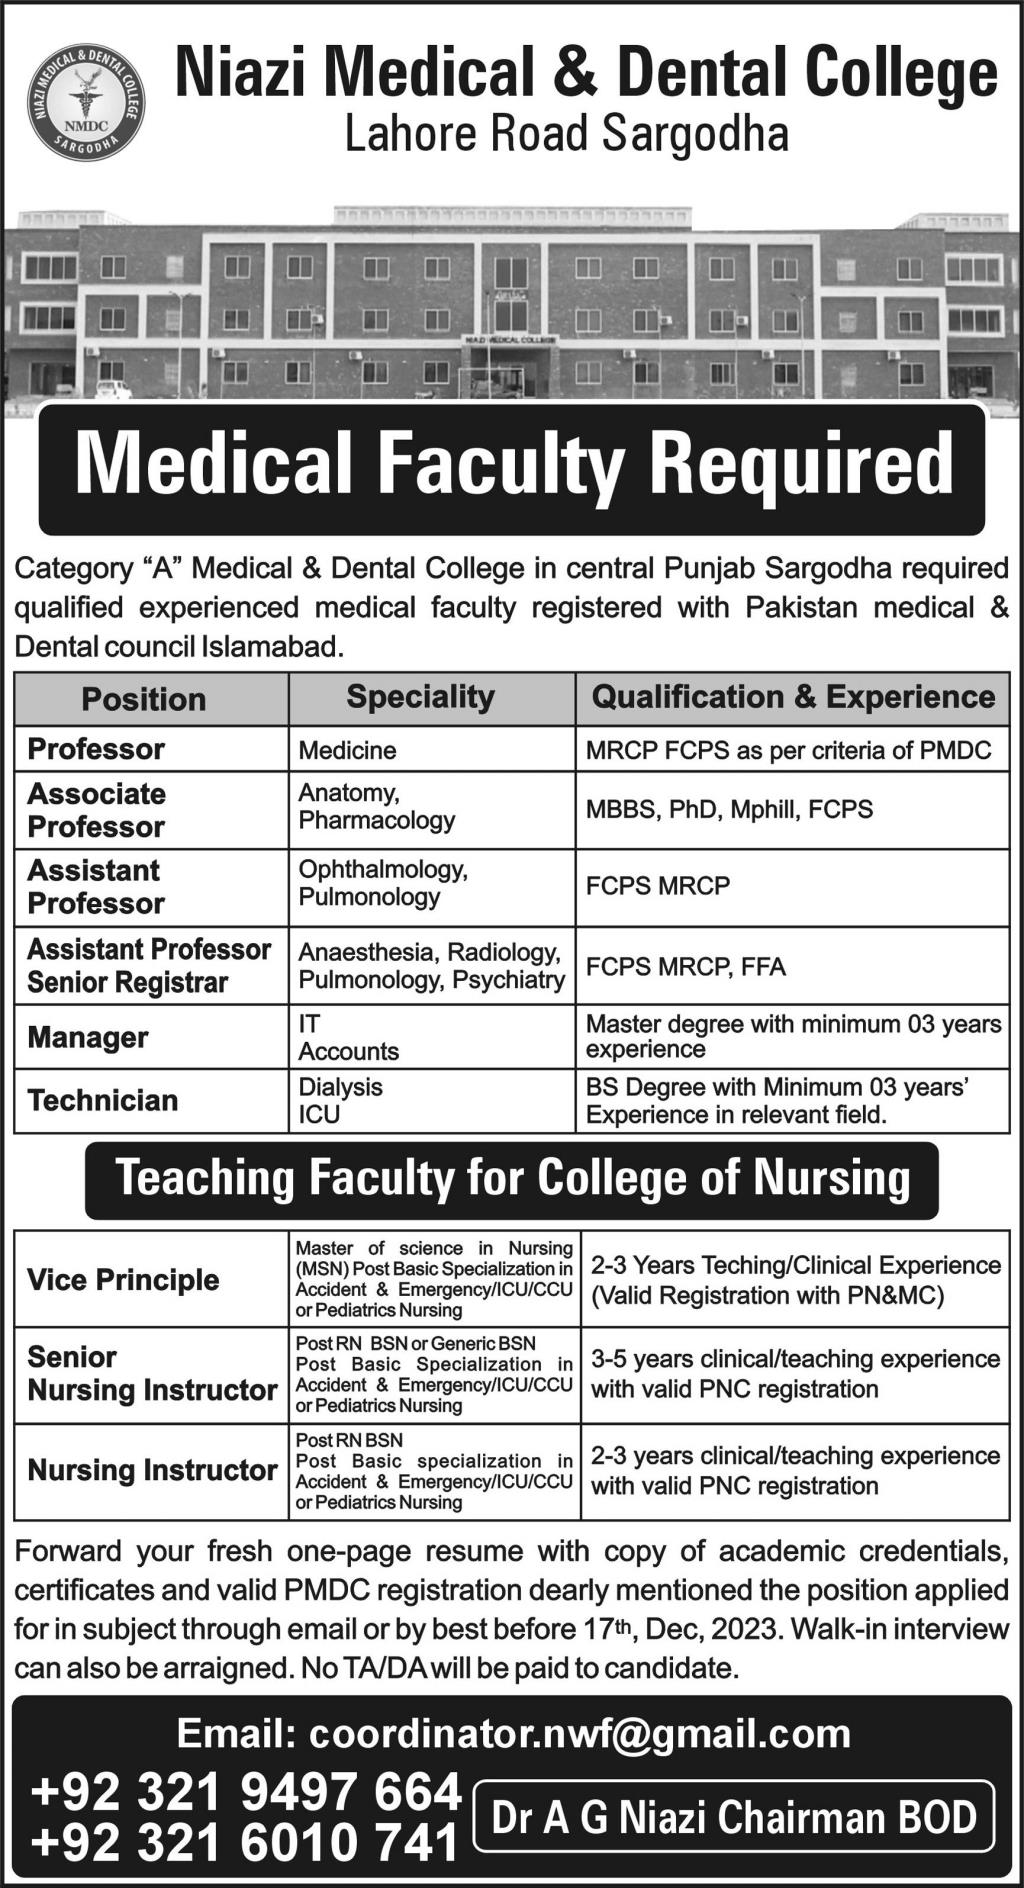 Niazi Medical & Dental College Lahore Road Sargodha Medical Faculty Jobs